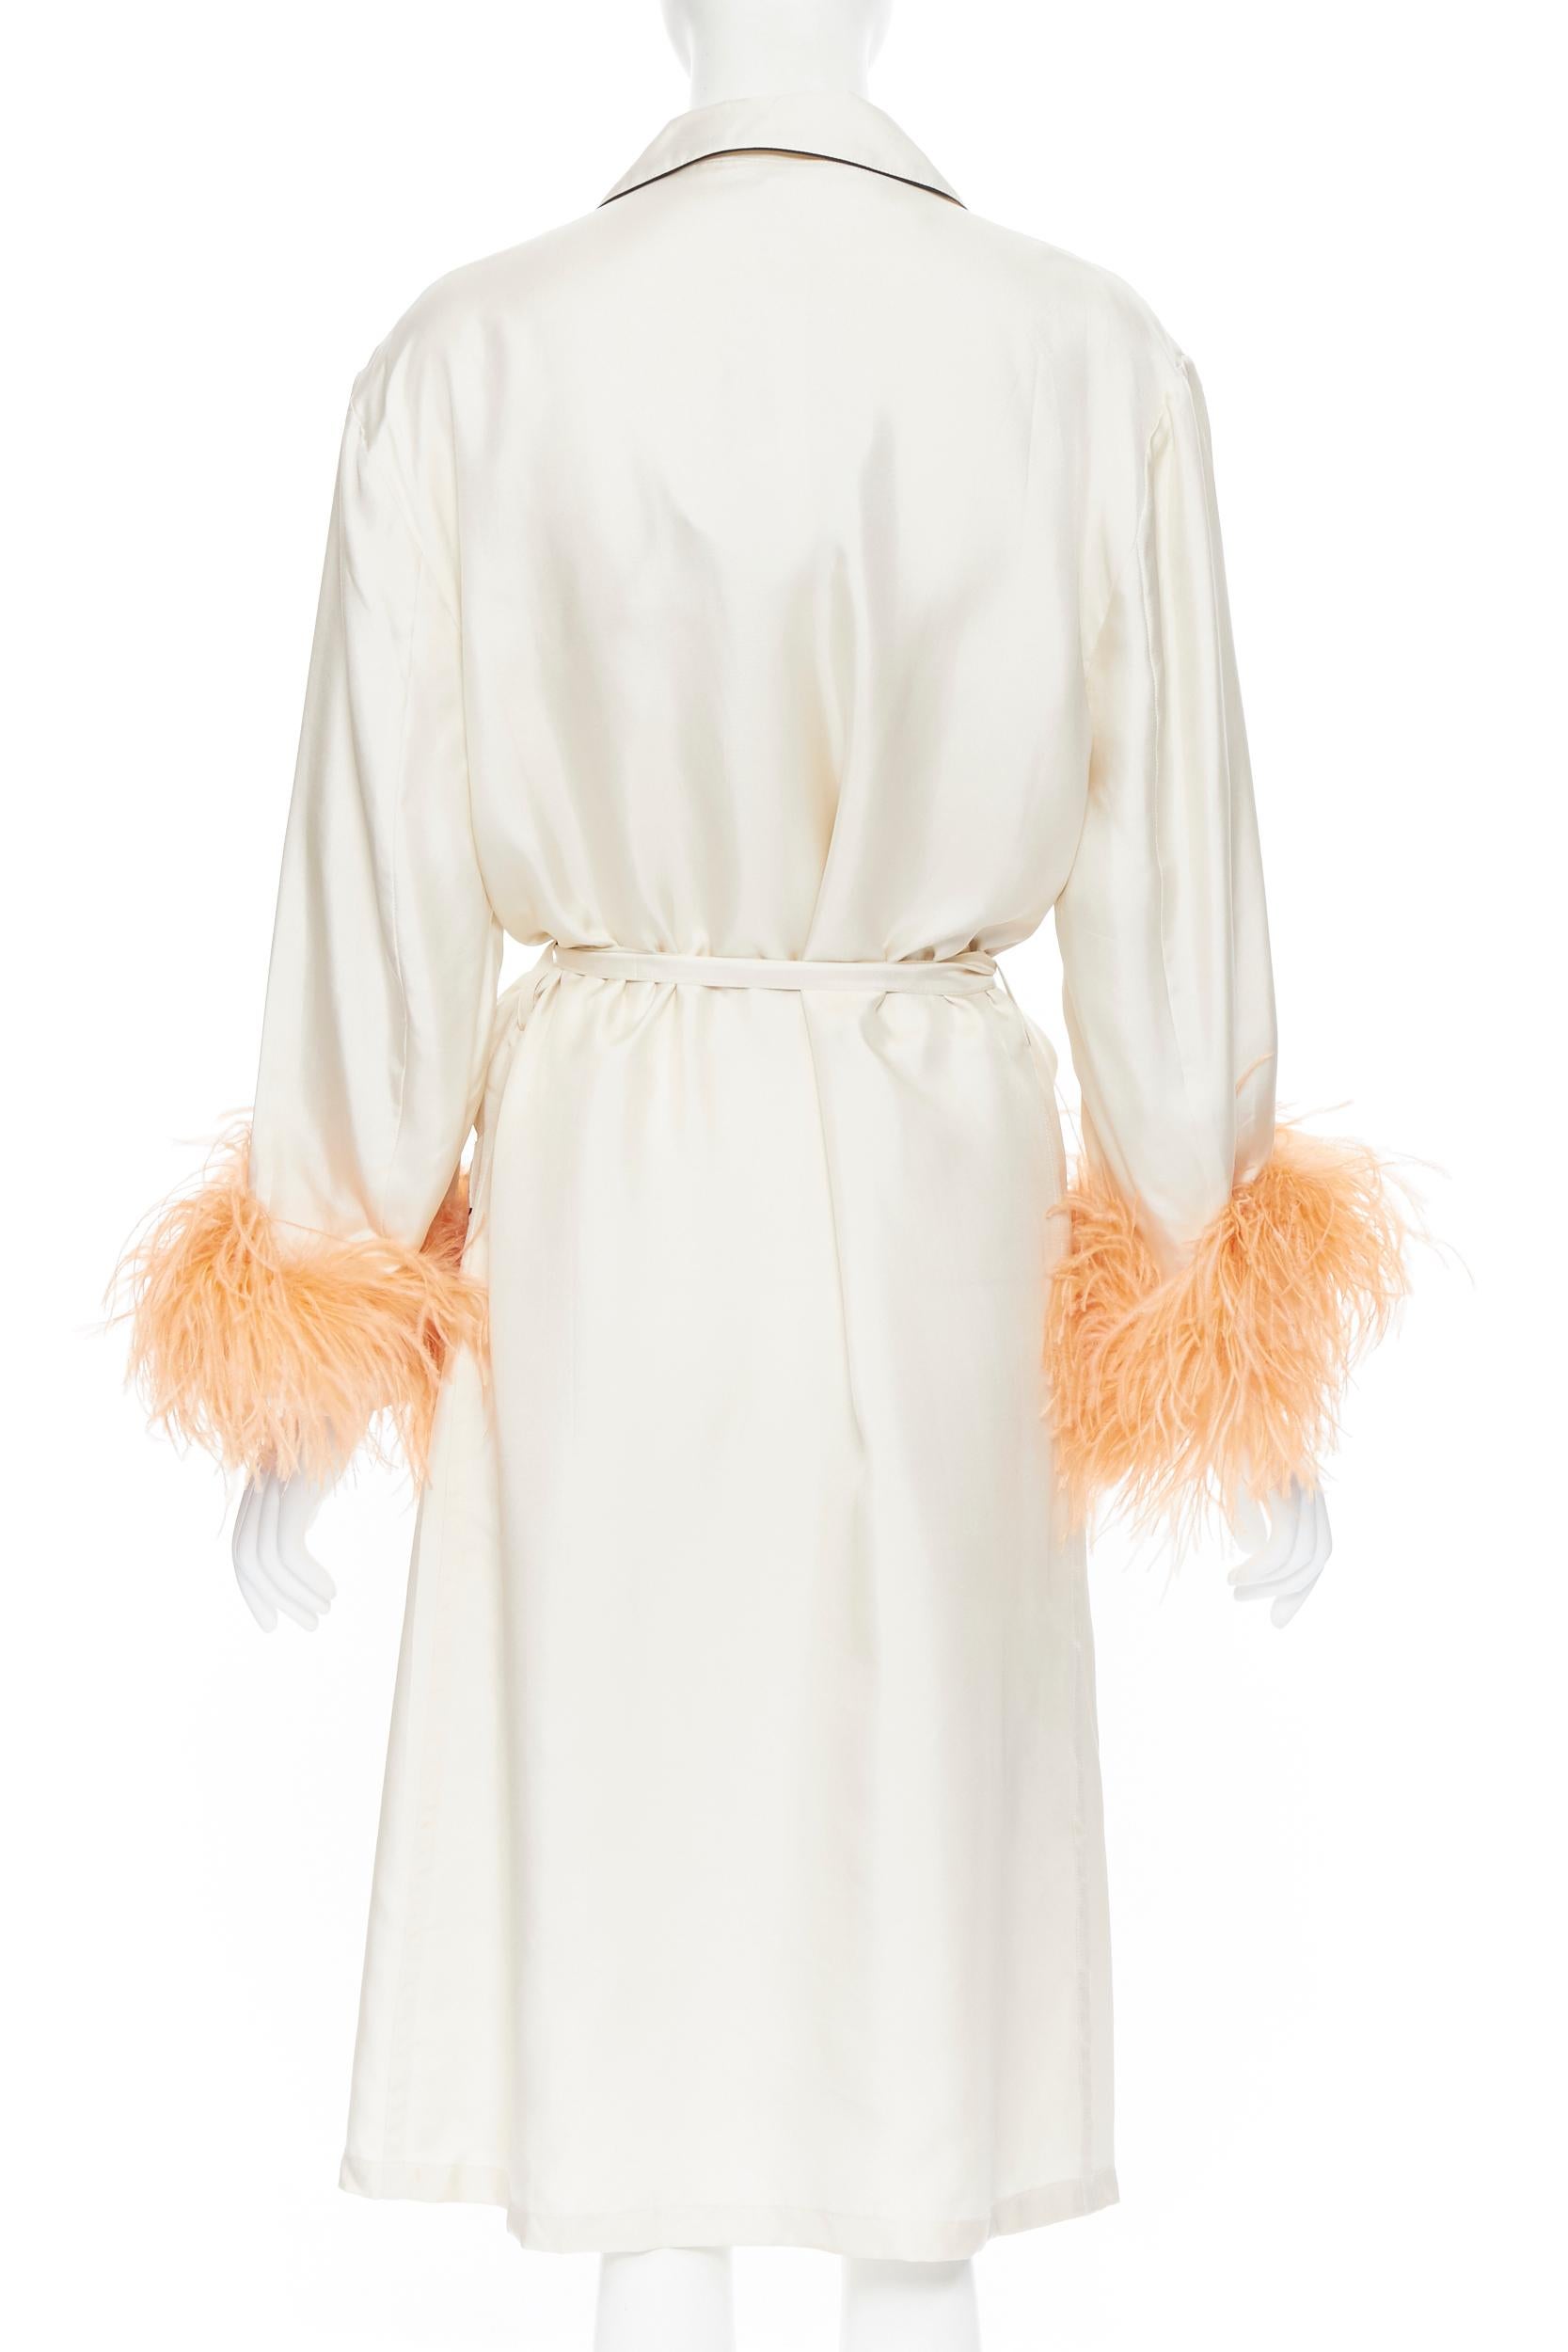 new PRADA 100% silk cream black piping orange feather cuff robe jacket Rihanna M 1